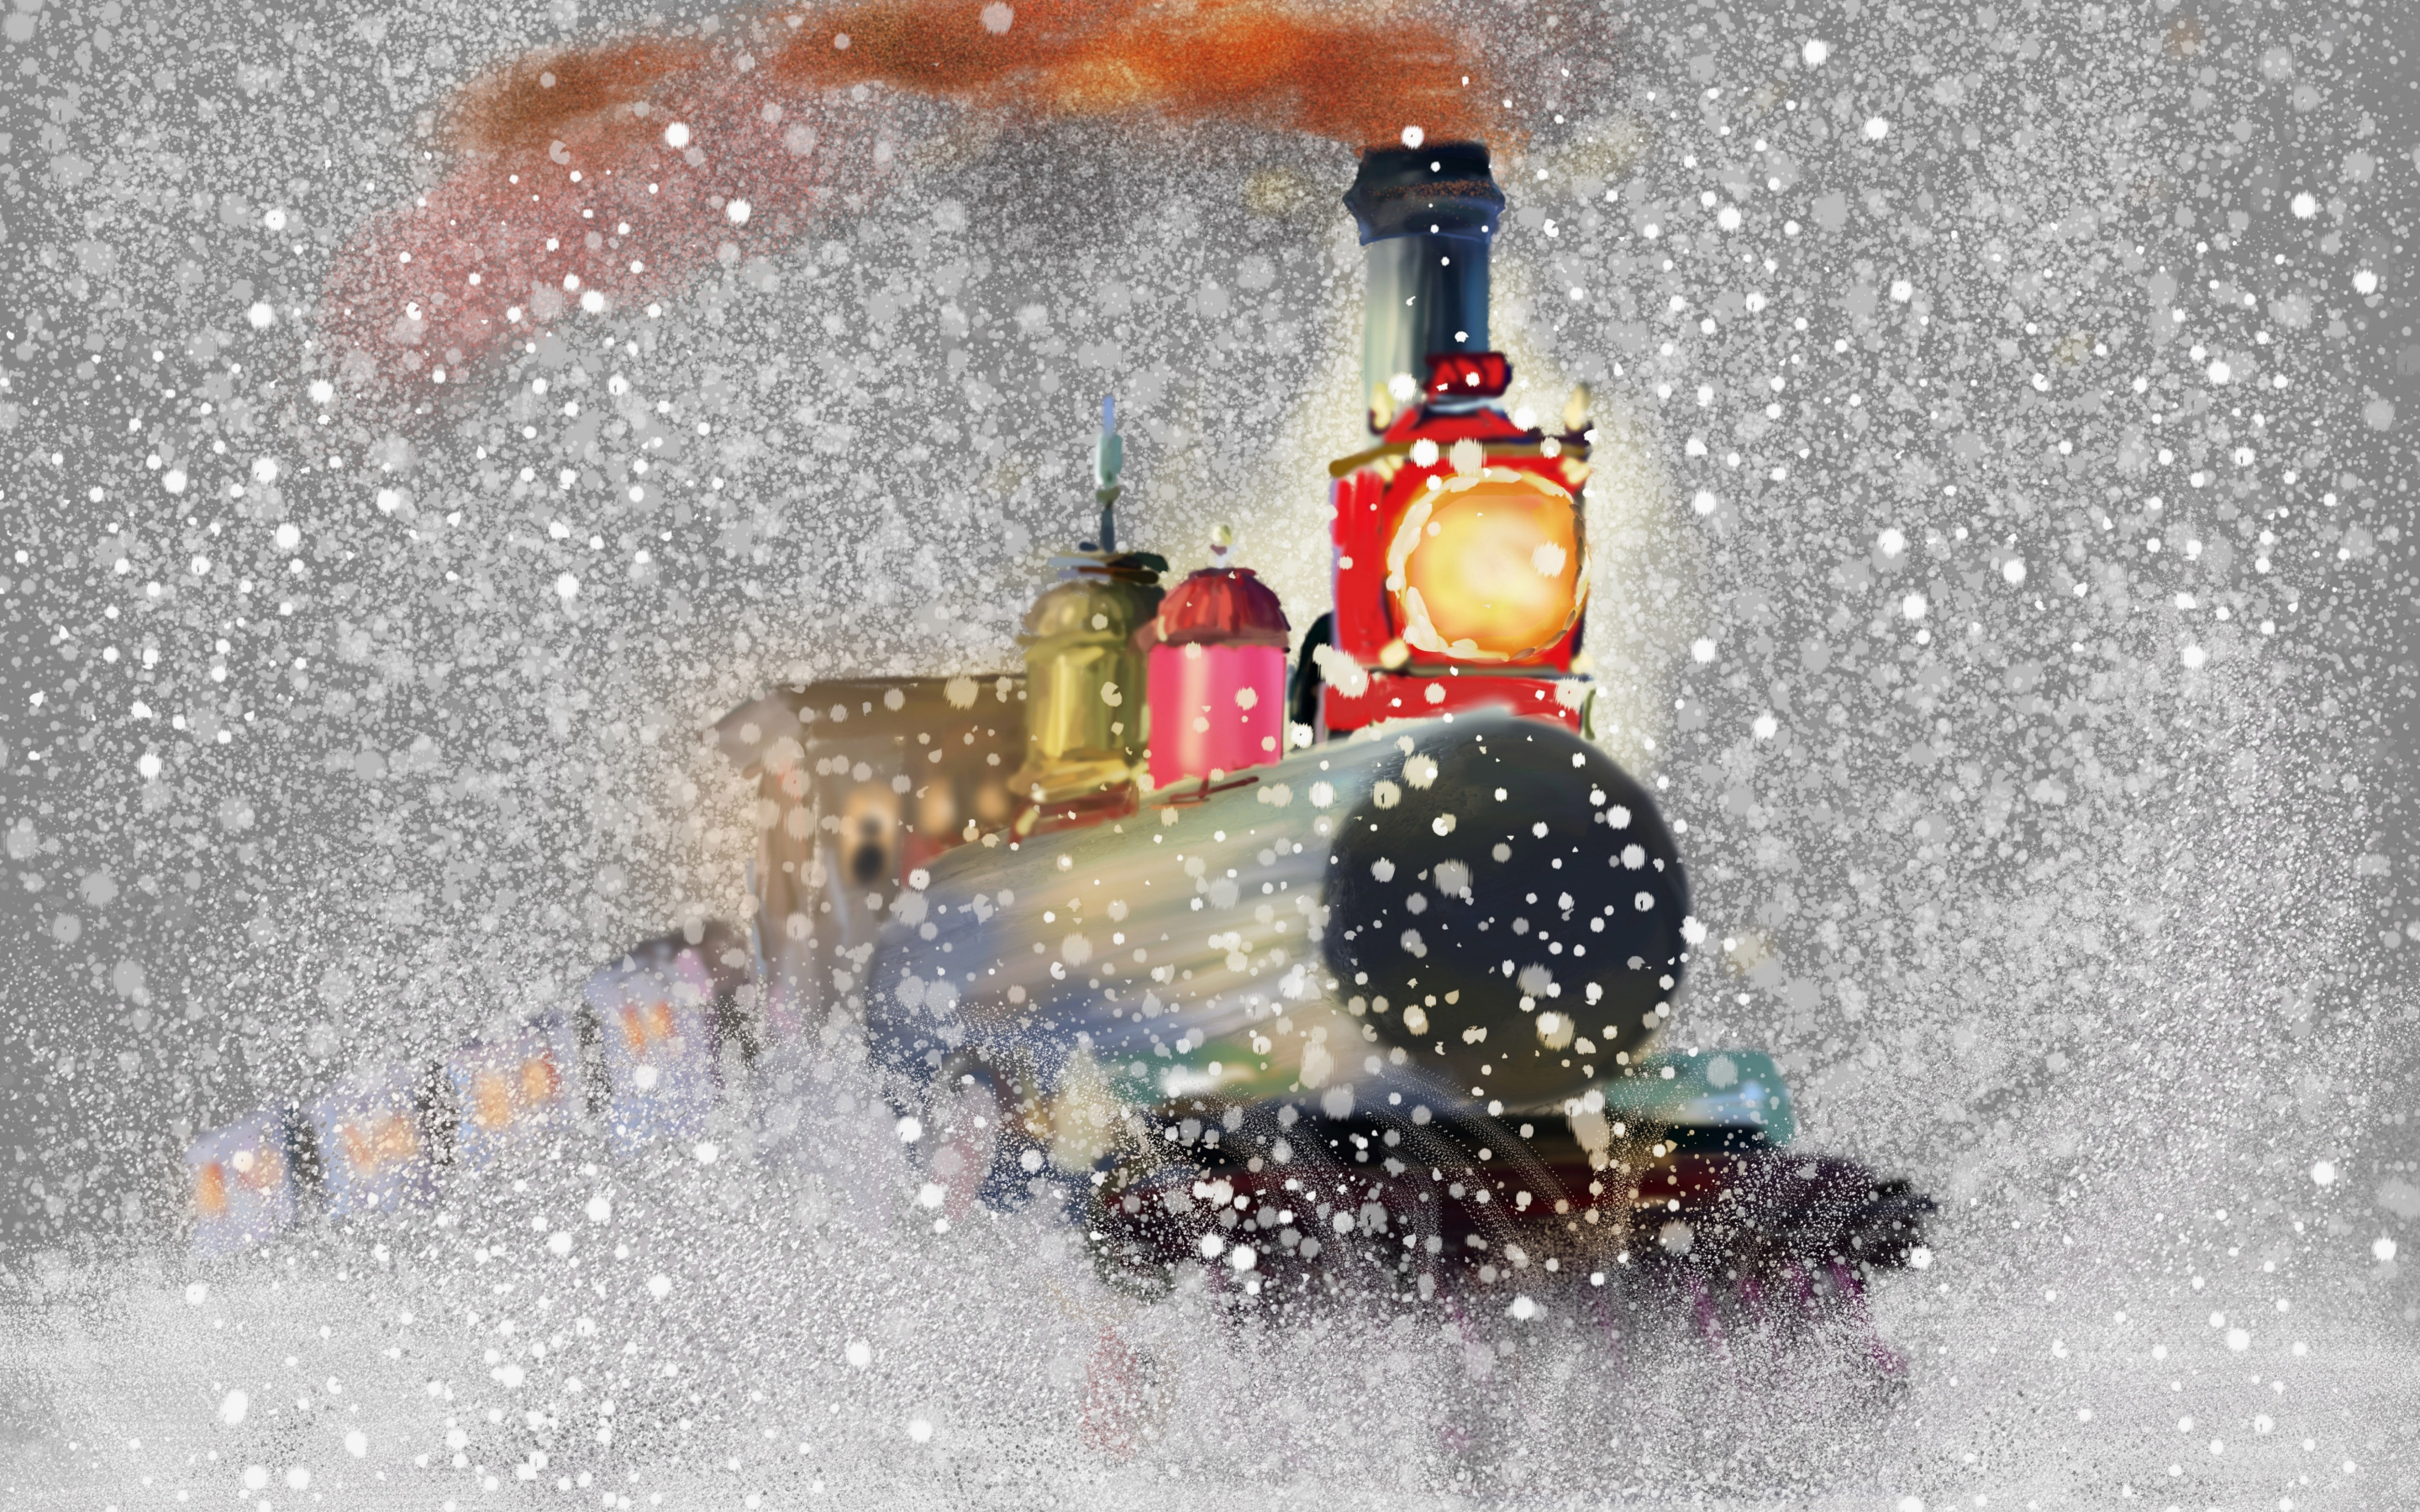 Train, winter, snowfall, snowflakes, artwork, 2880x1800 wallpaper